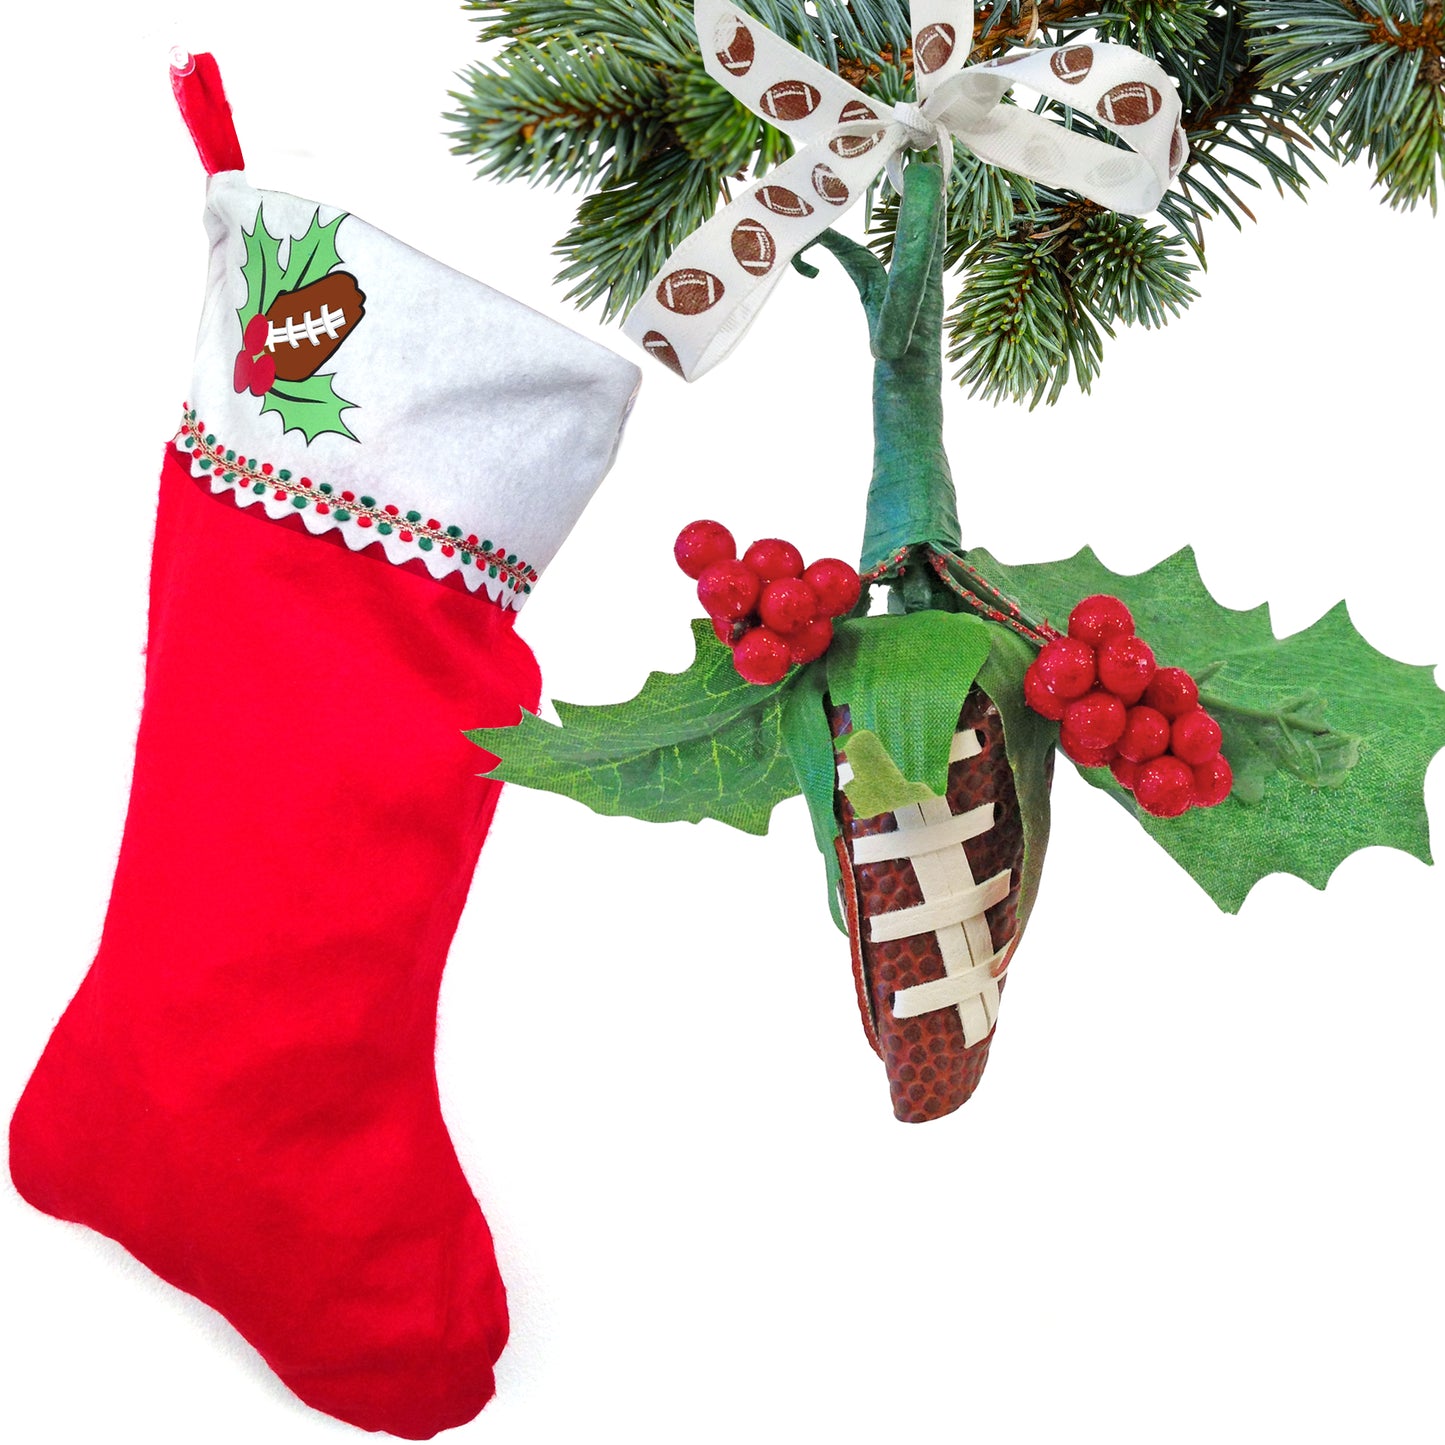 Football Rose Christmas Ornament and Stocking Gift Set